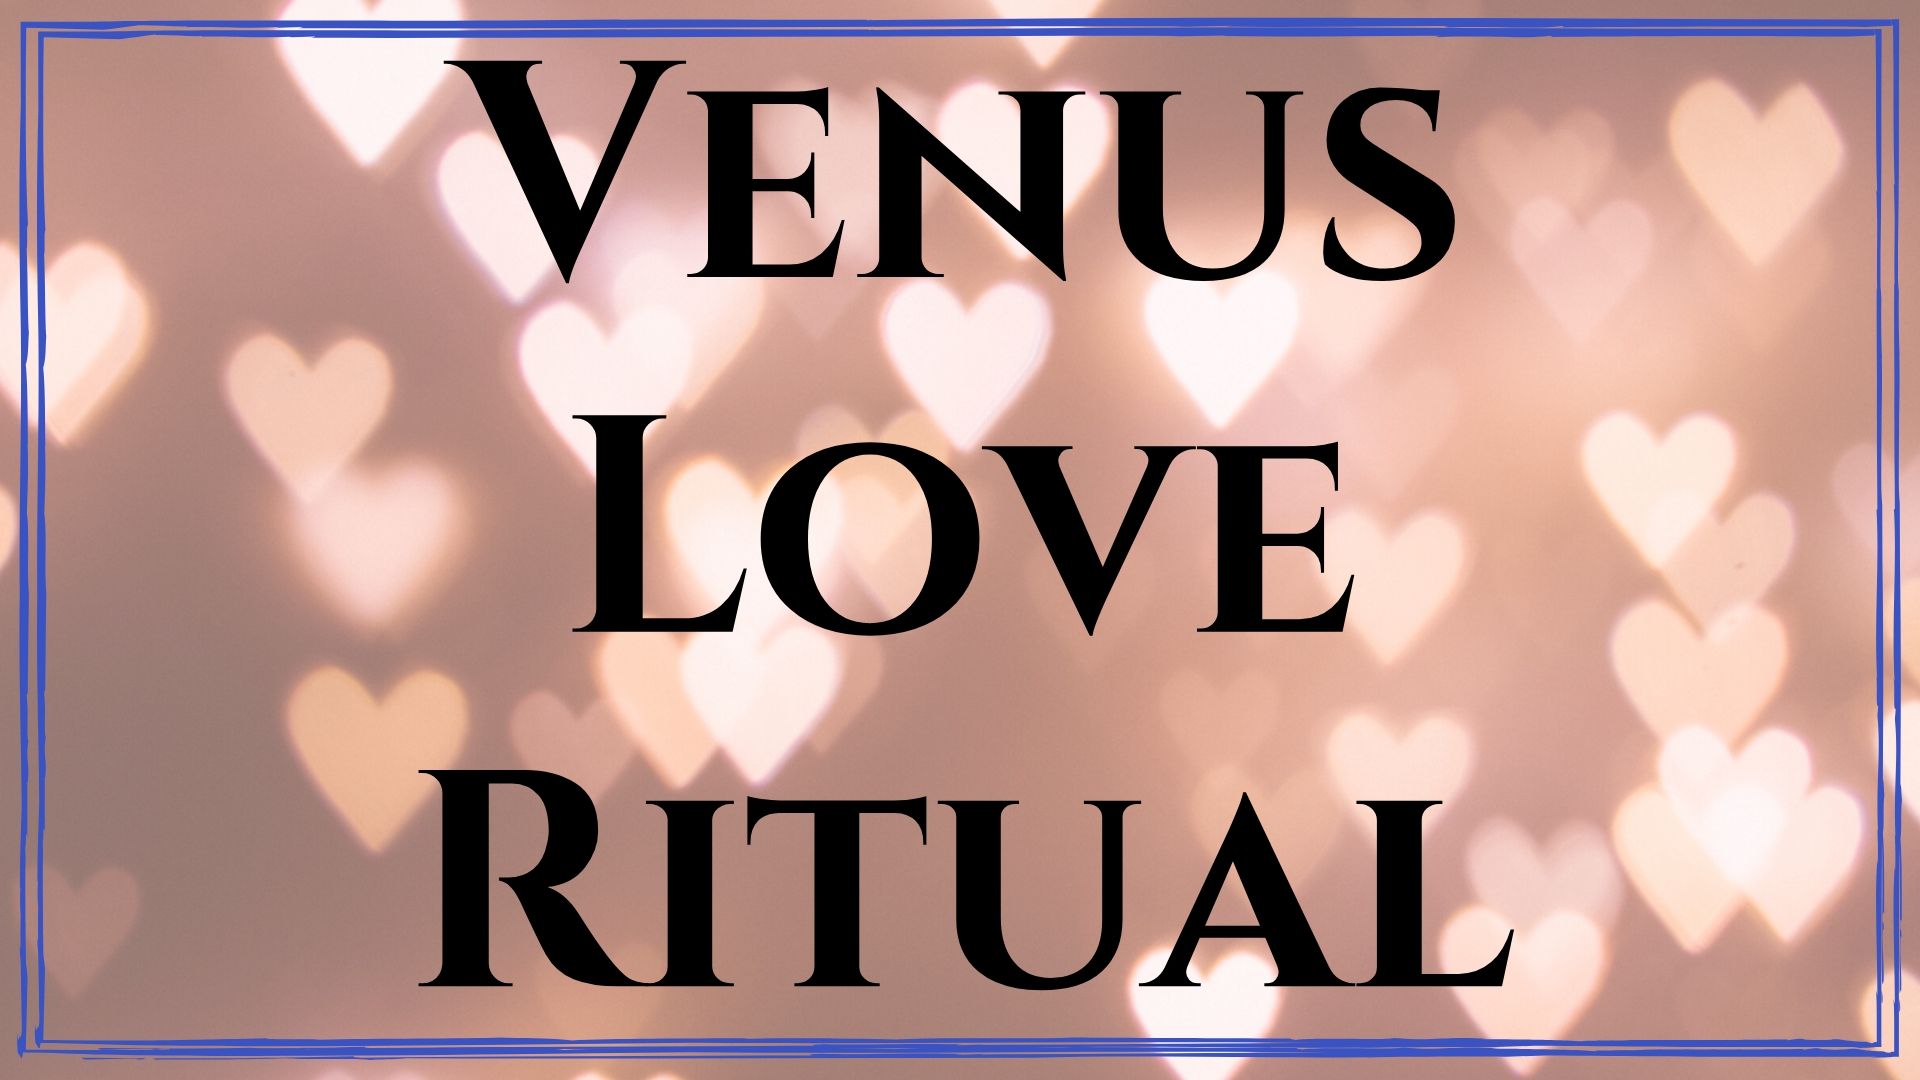 Venus Love Ritual